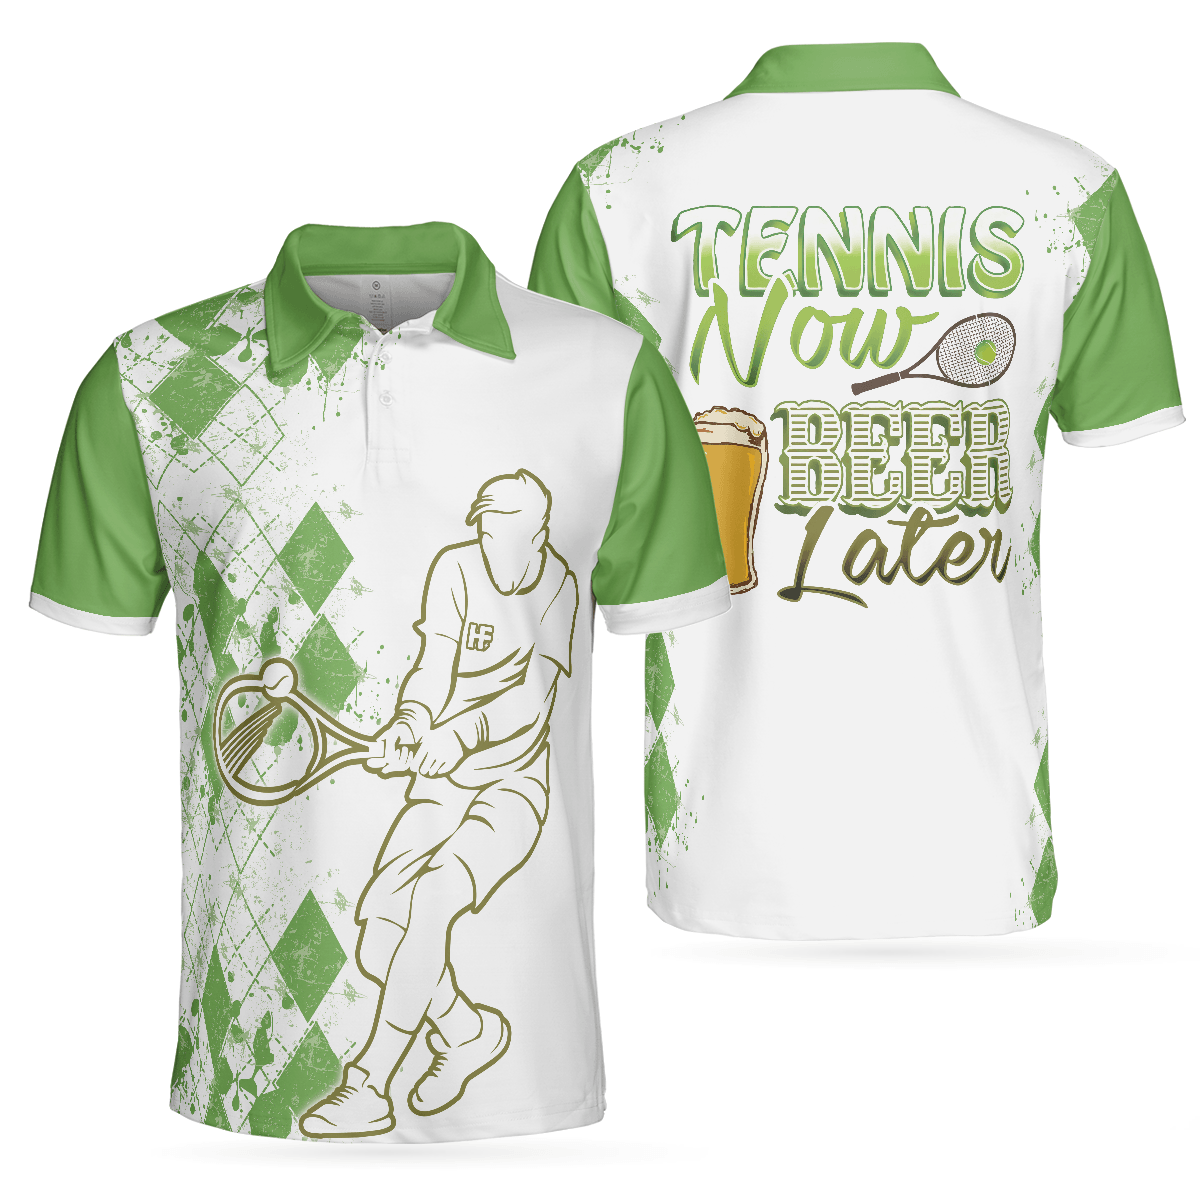 Men Tennis Polo Shirt, Tennis Now Beer Later Polo Shirt, White And Green Tennis Shirt For Men - Perfect Gift For Men, Tennis Players - Amzanimalsgift